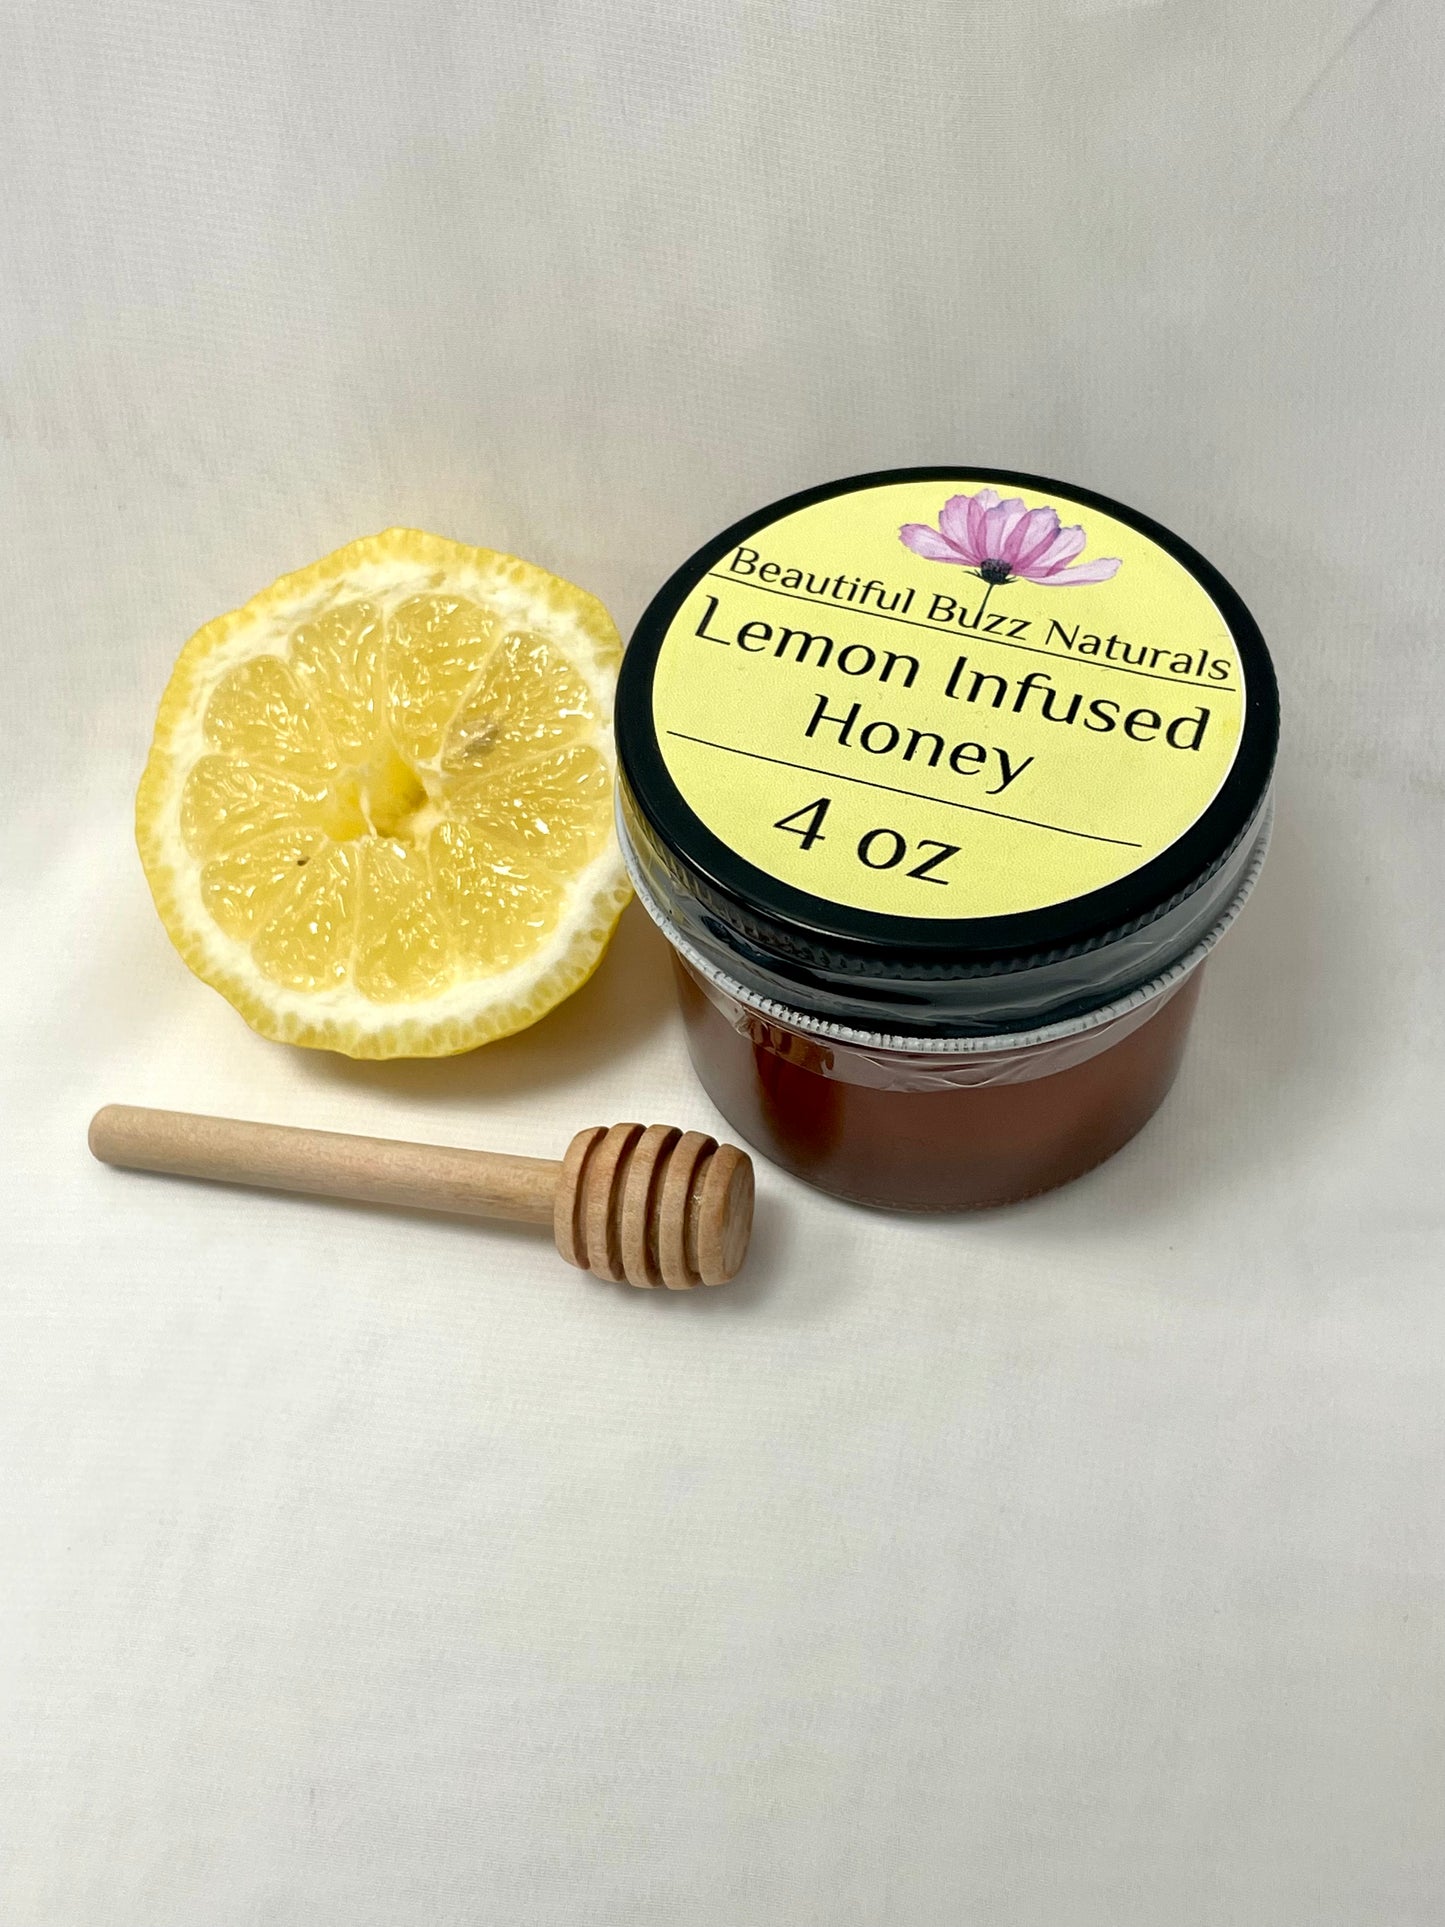 Gourmet Specialty Honey 4 oz - $8.49 each/ 3 for $24